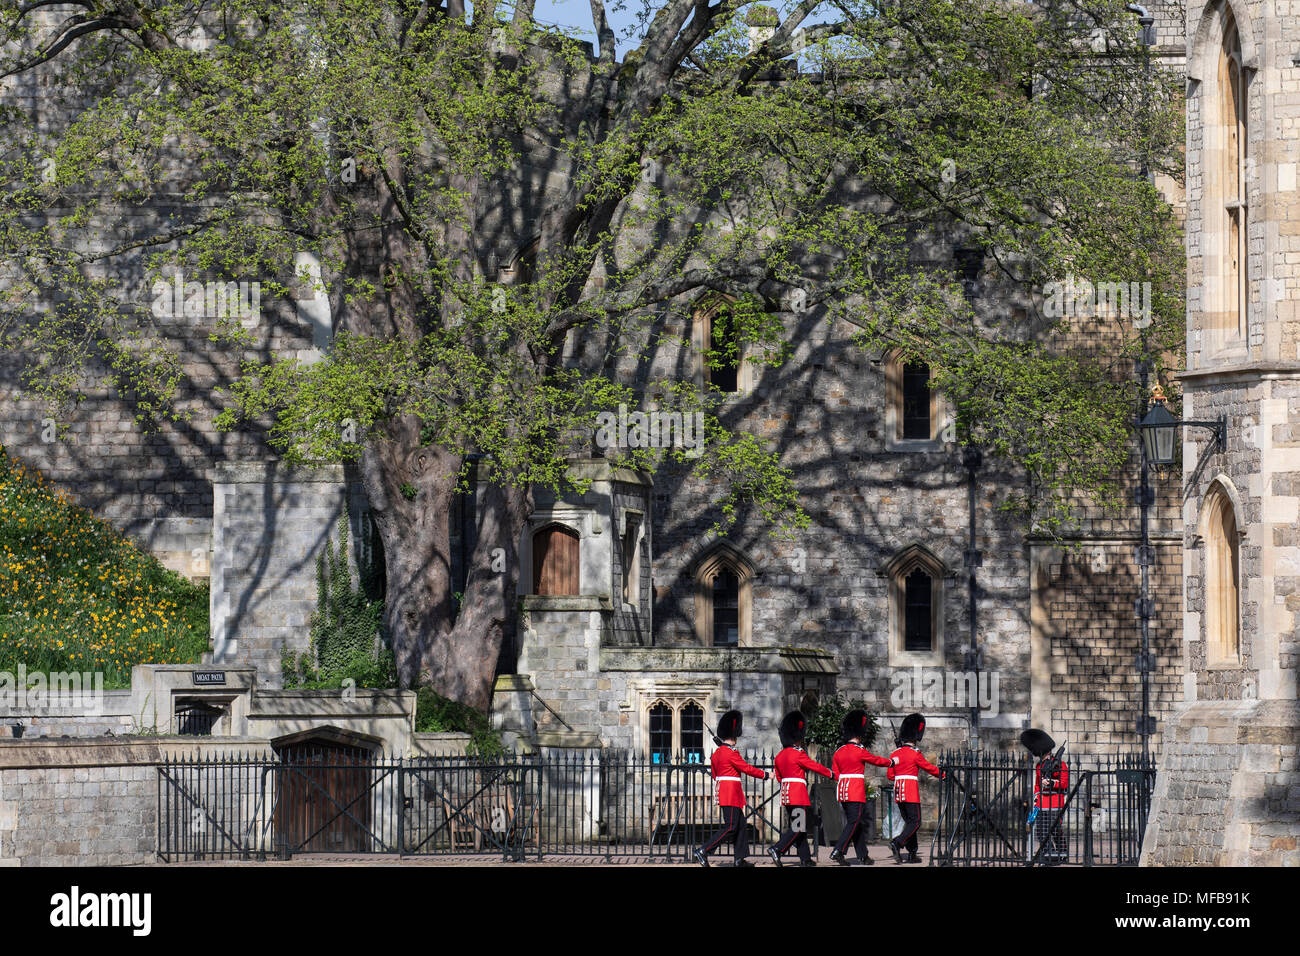 Guardsmen Inside Windsor Castle March From The Quadrangle At